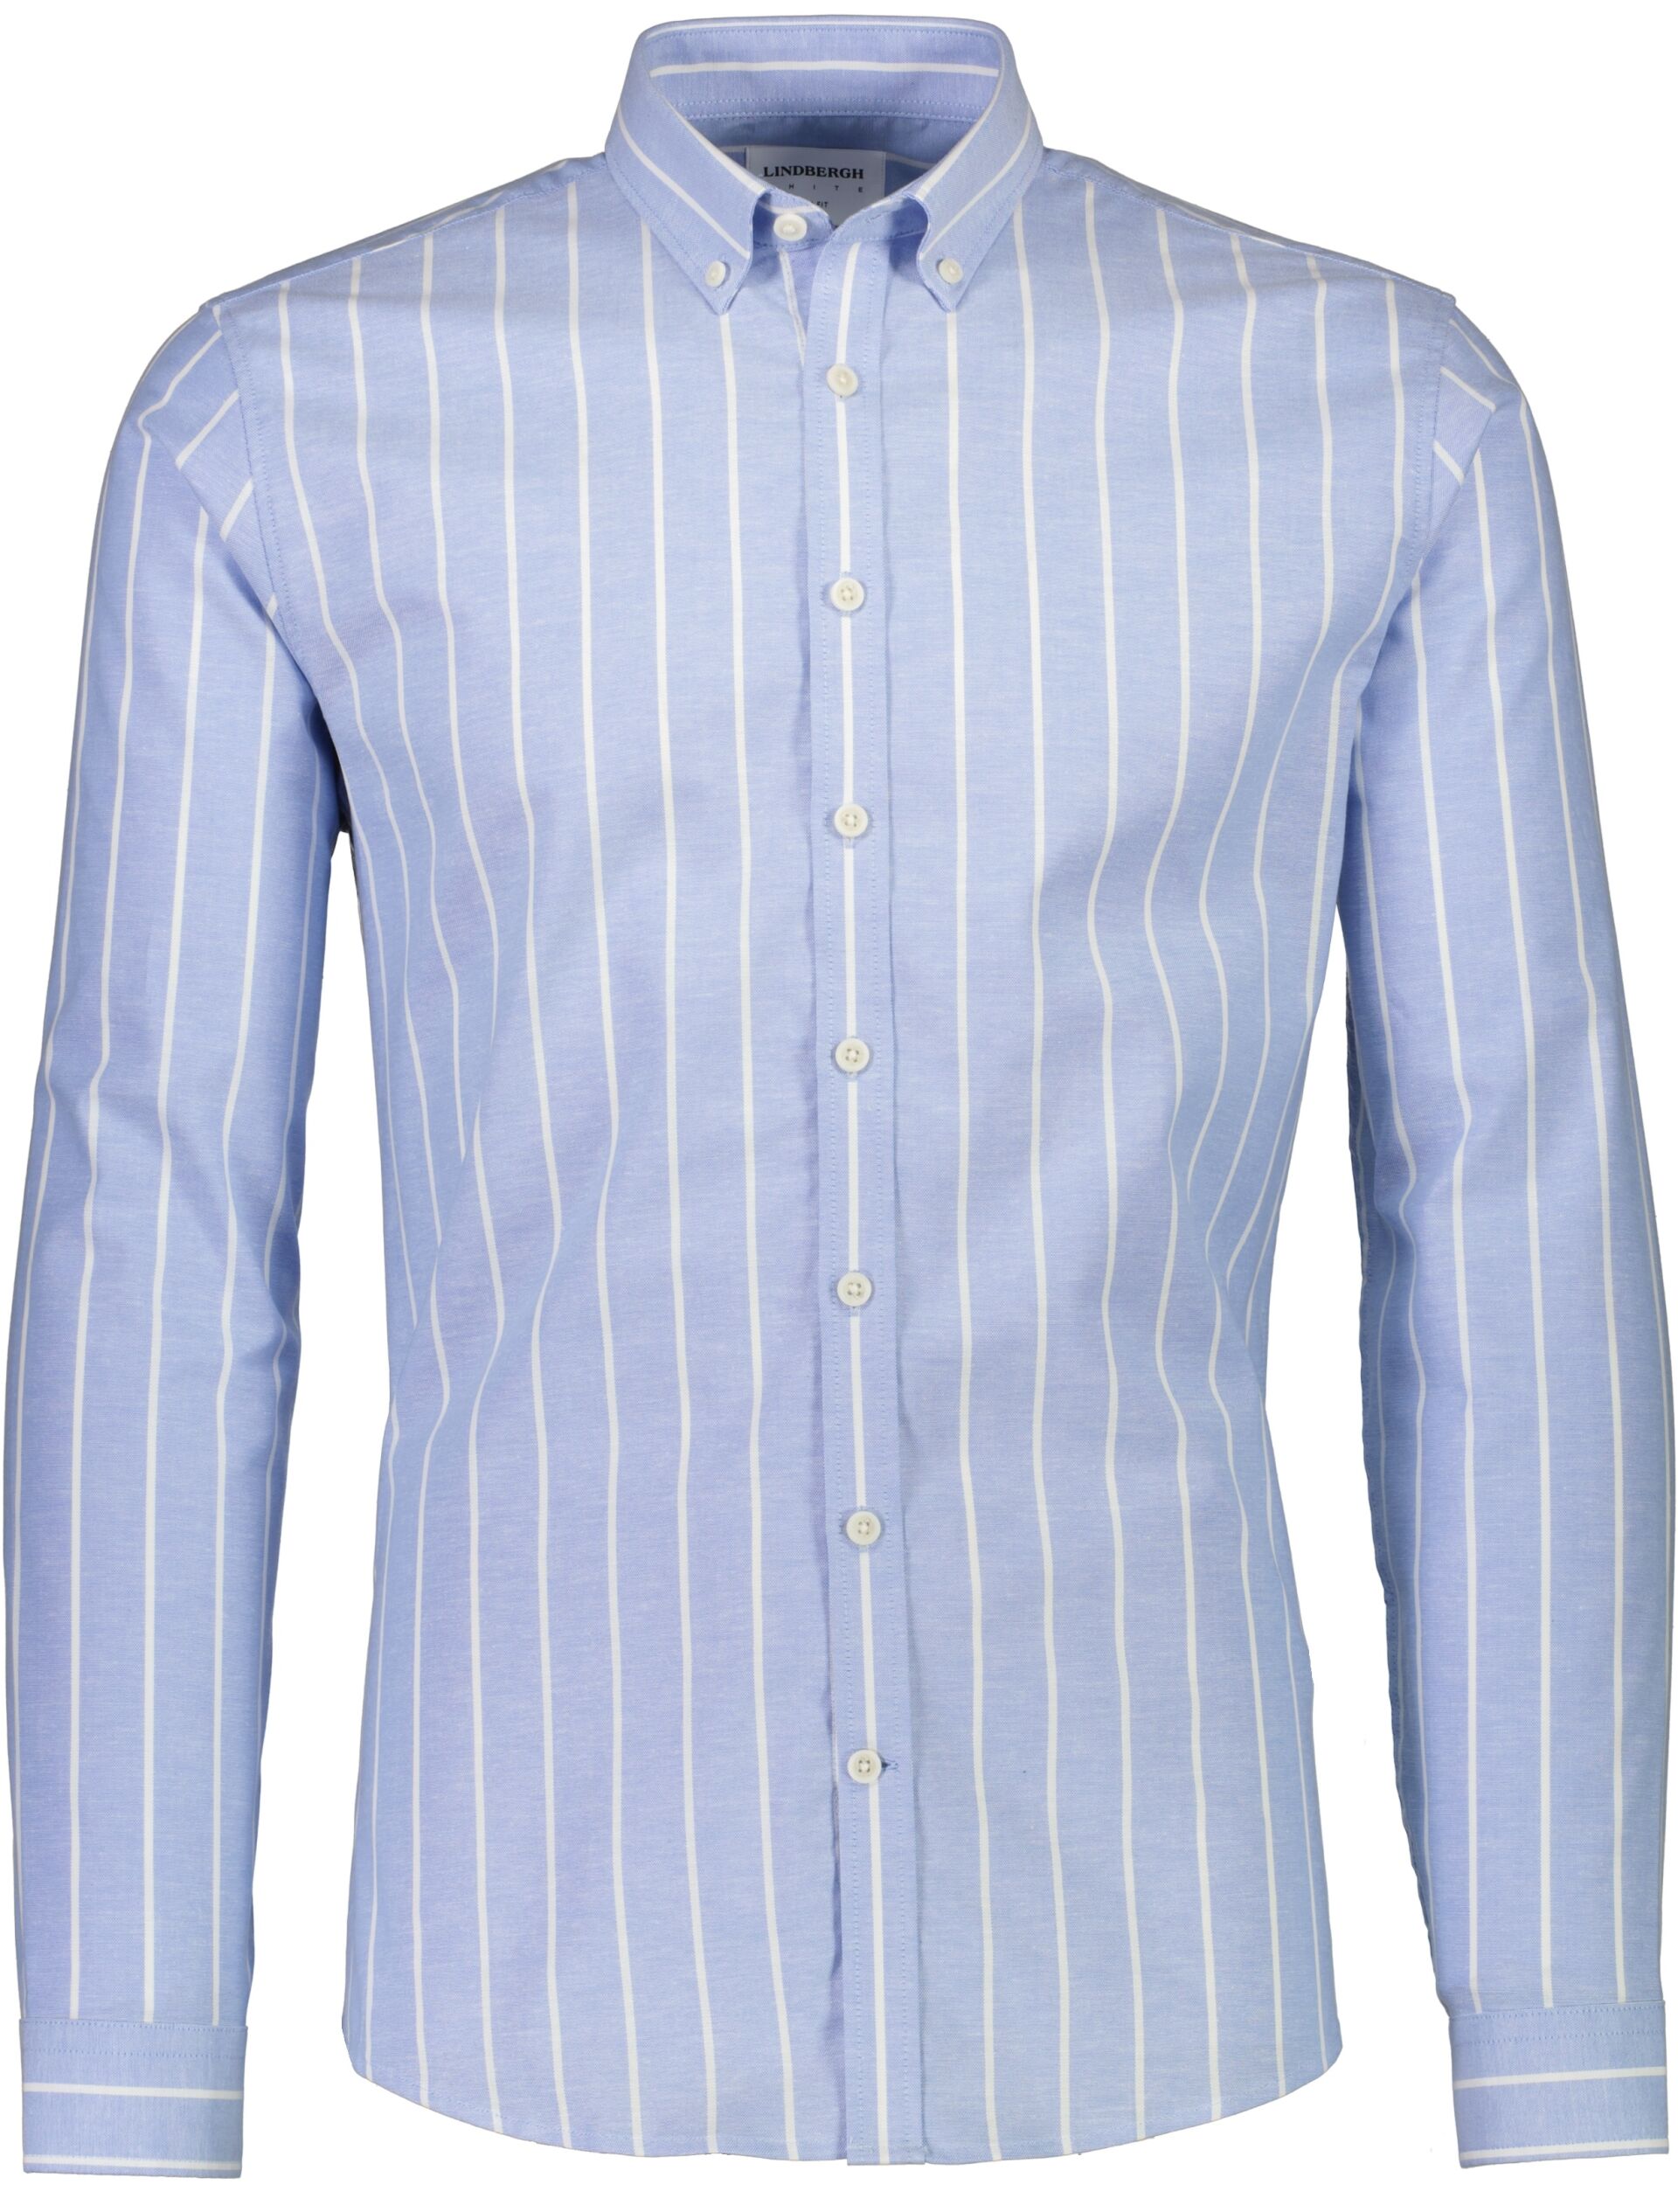 Oxford shirt 30-203536